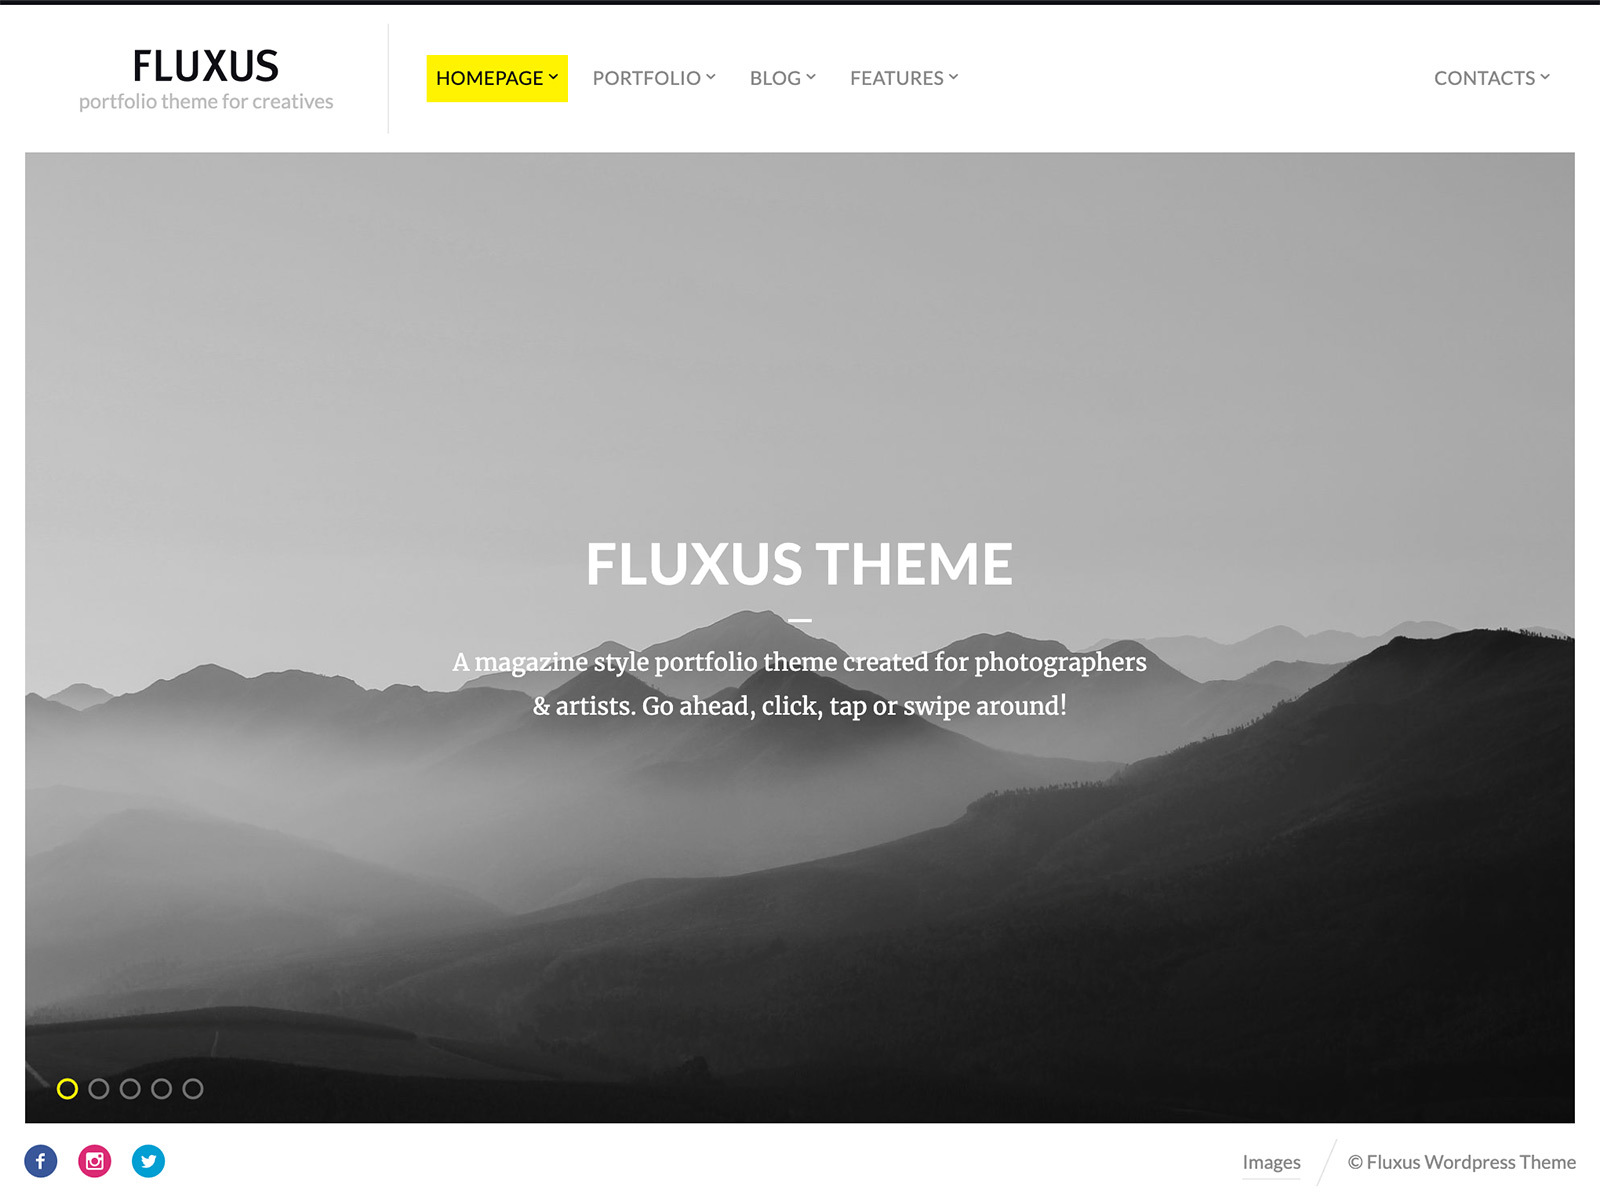 fluxus-wordpress-theme-image-pe8-o.jpg